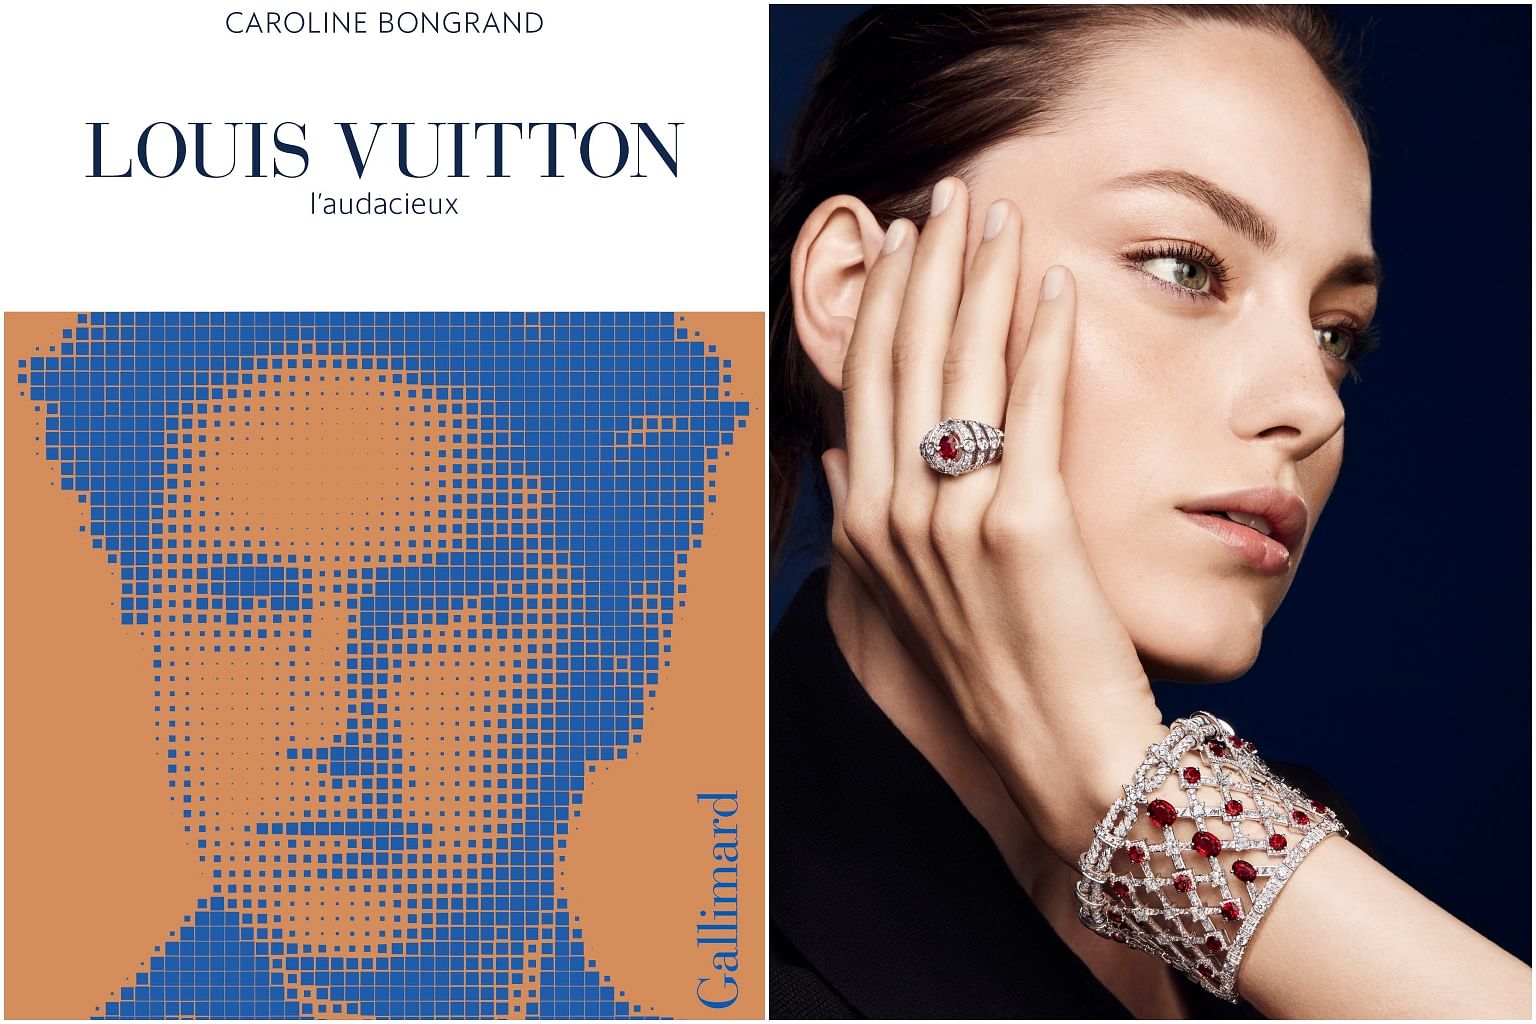 Celebrating 200 years of Louis Vuitton